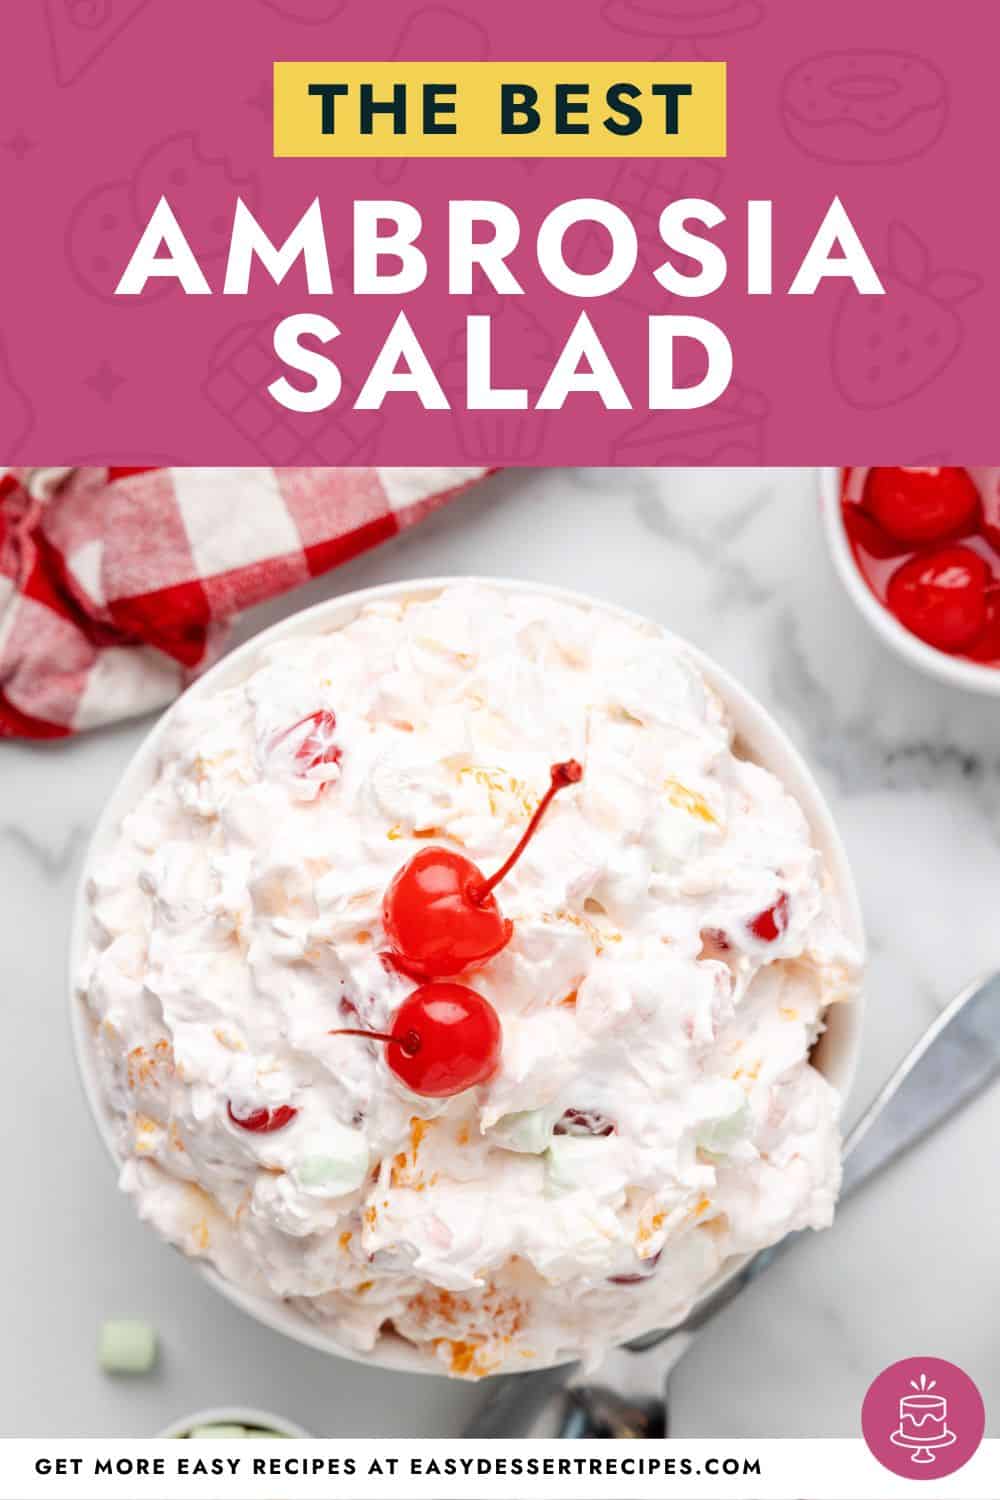 The best ambrosia salad.